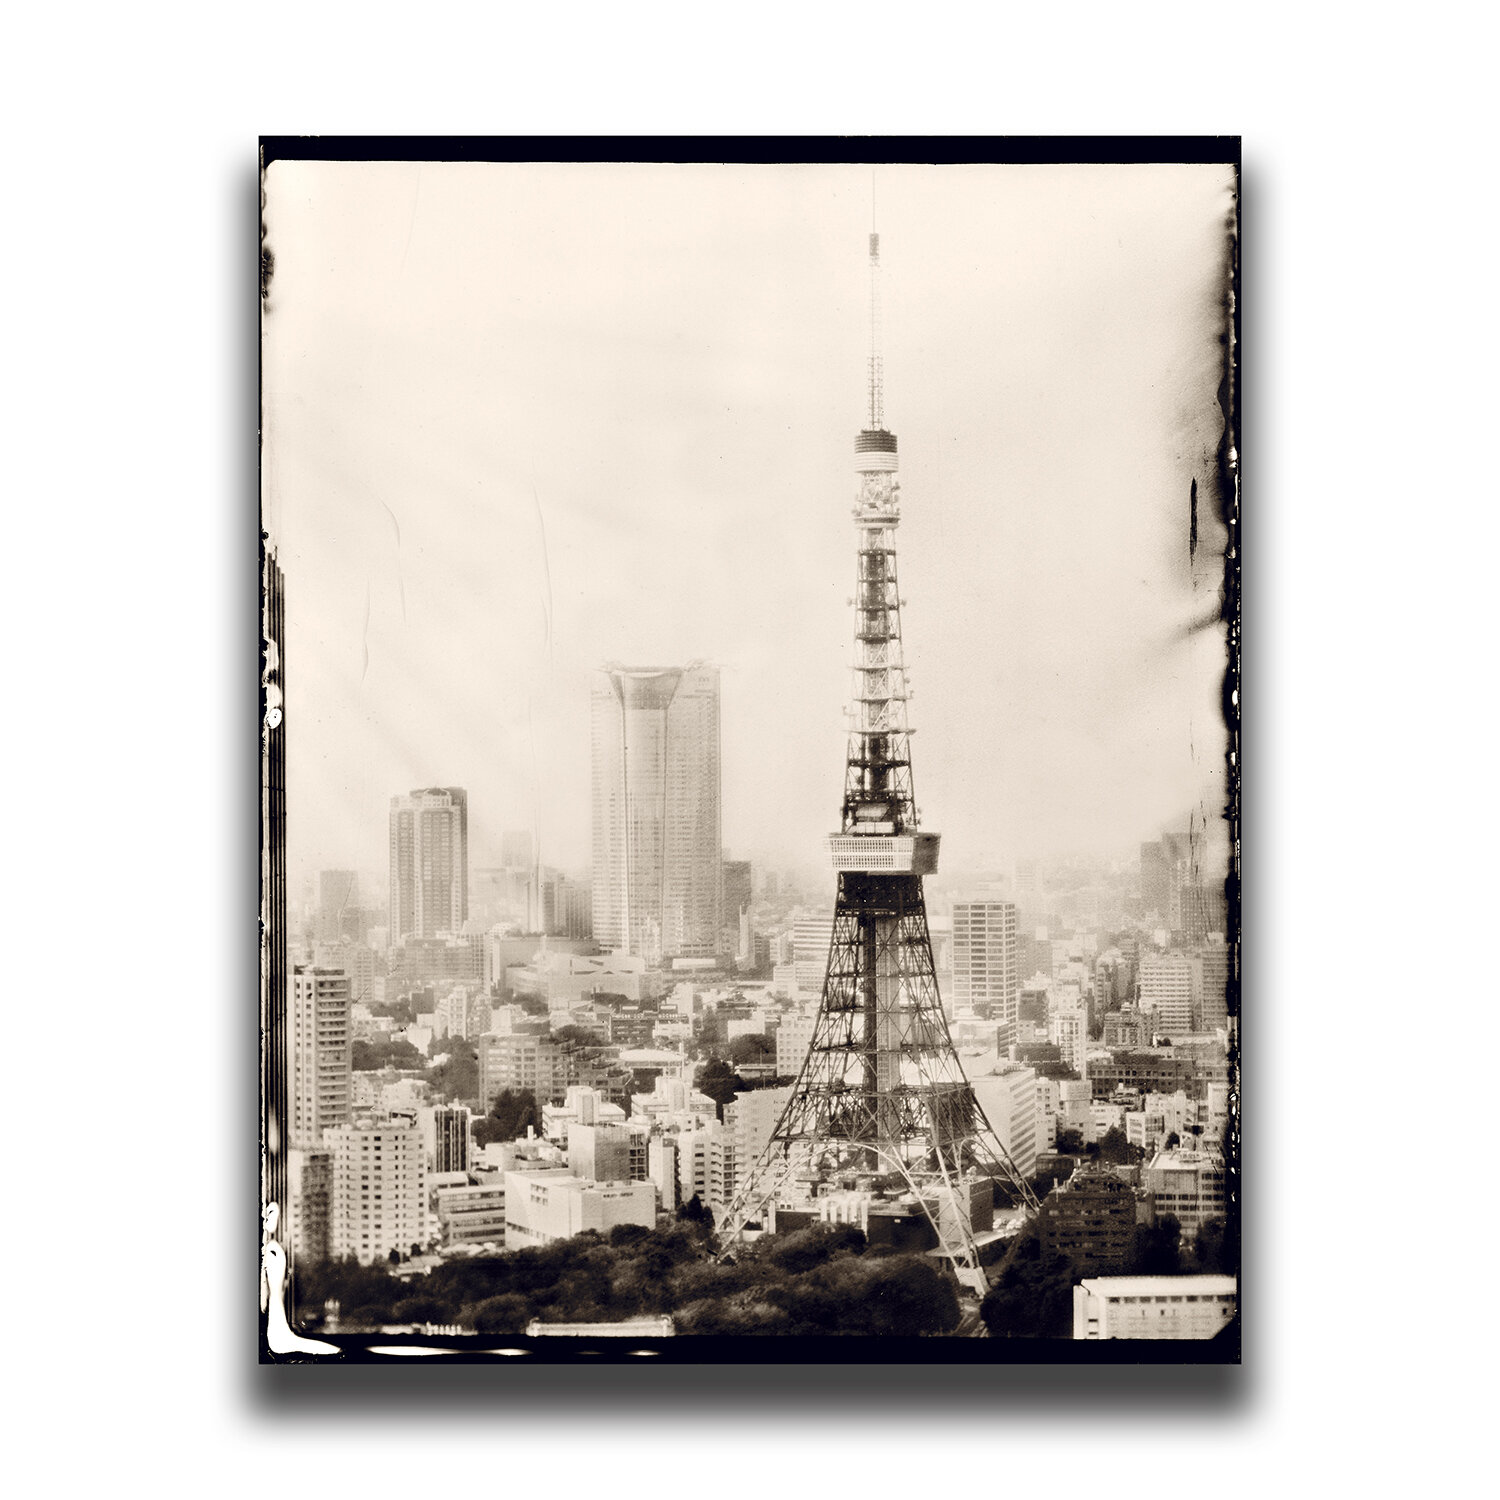 Tokyo Tower/#東京タワー/도쿄 타워/東京铁塔